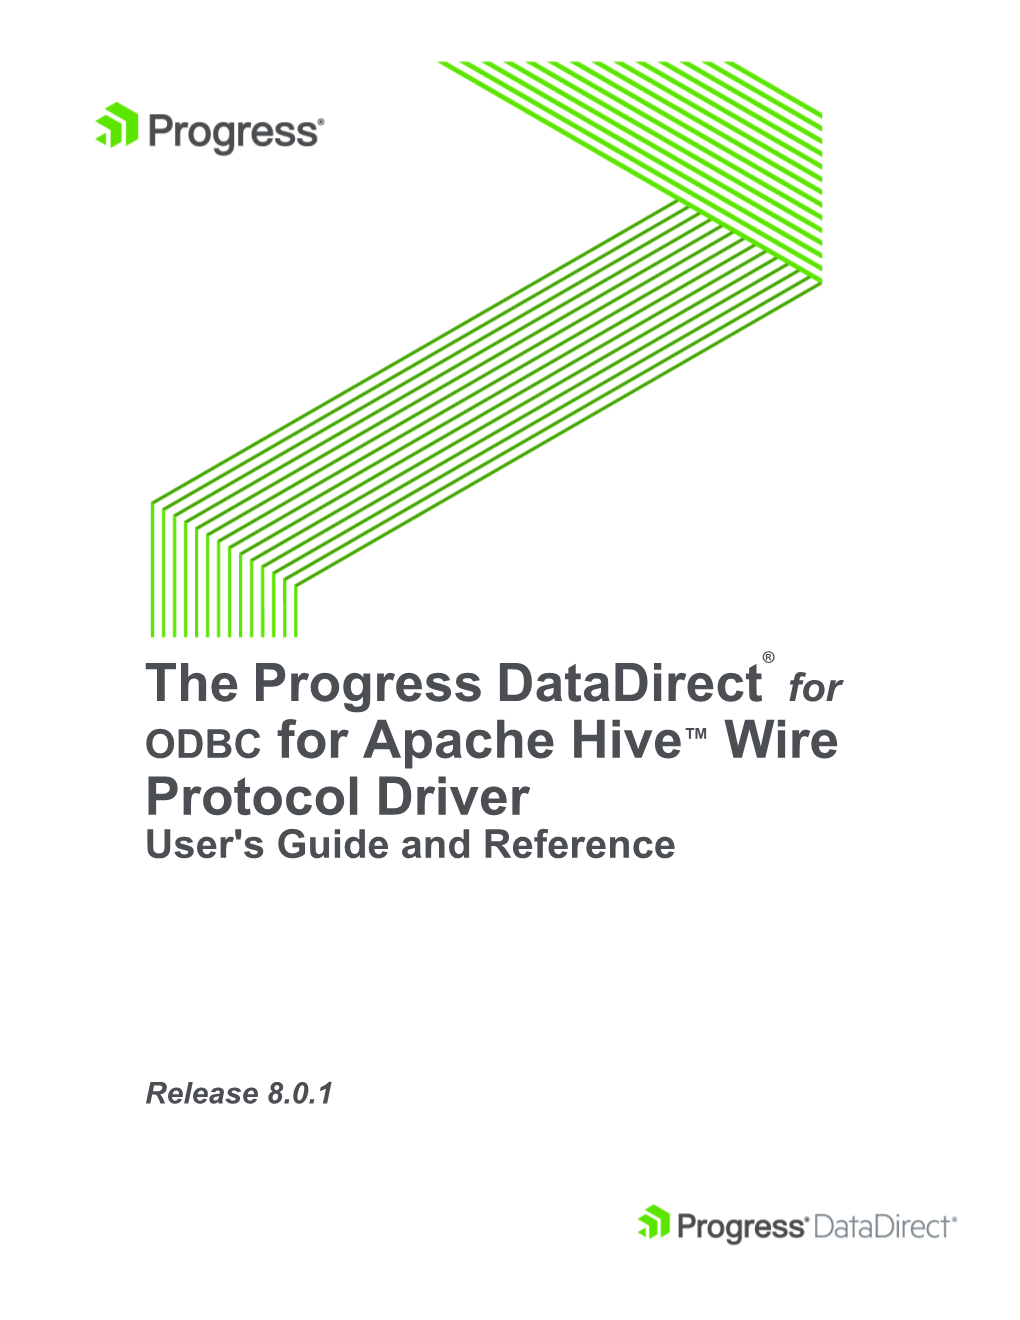 The Progress Datadirect® for ODBC for Apache Hive™ Wire Protocol Driver